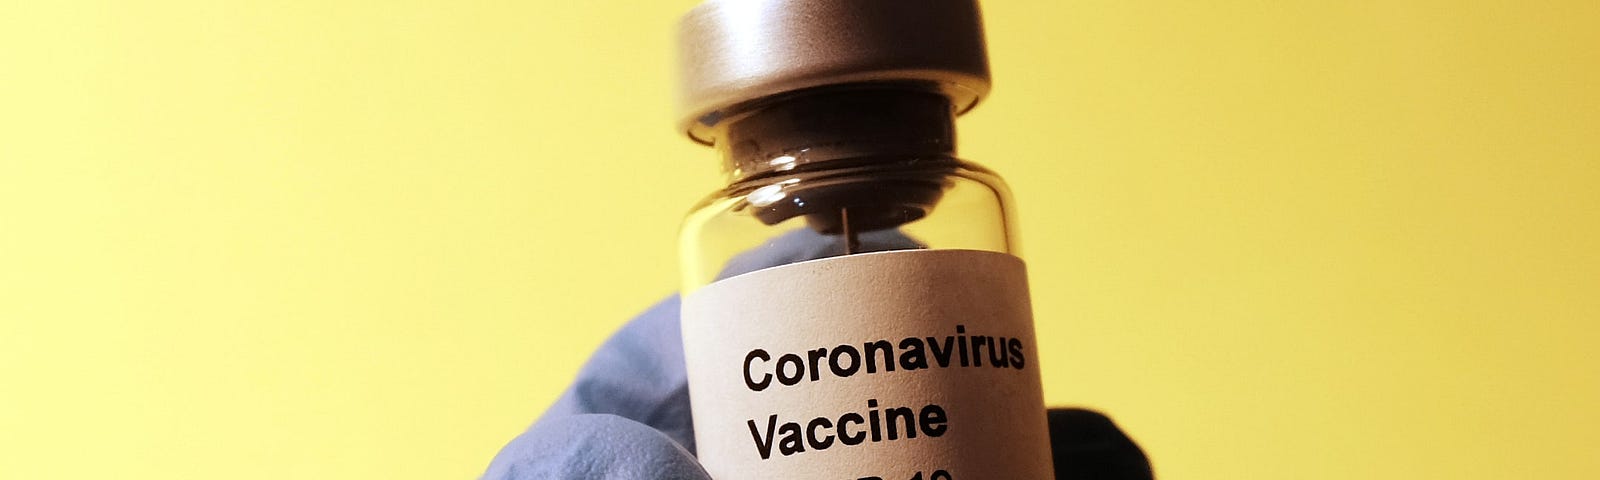 Coronavirus Vaccination COVID-19 Anti-vaxxers